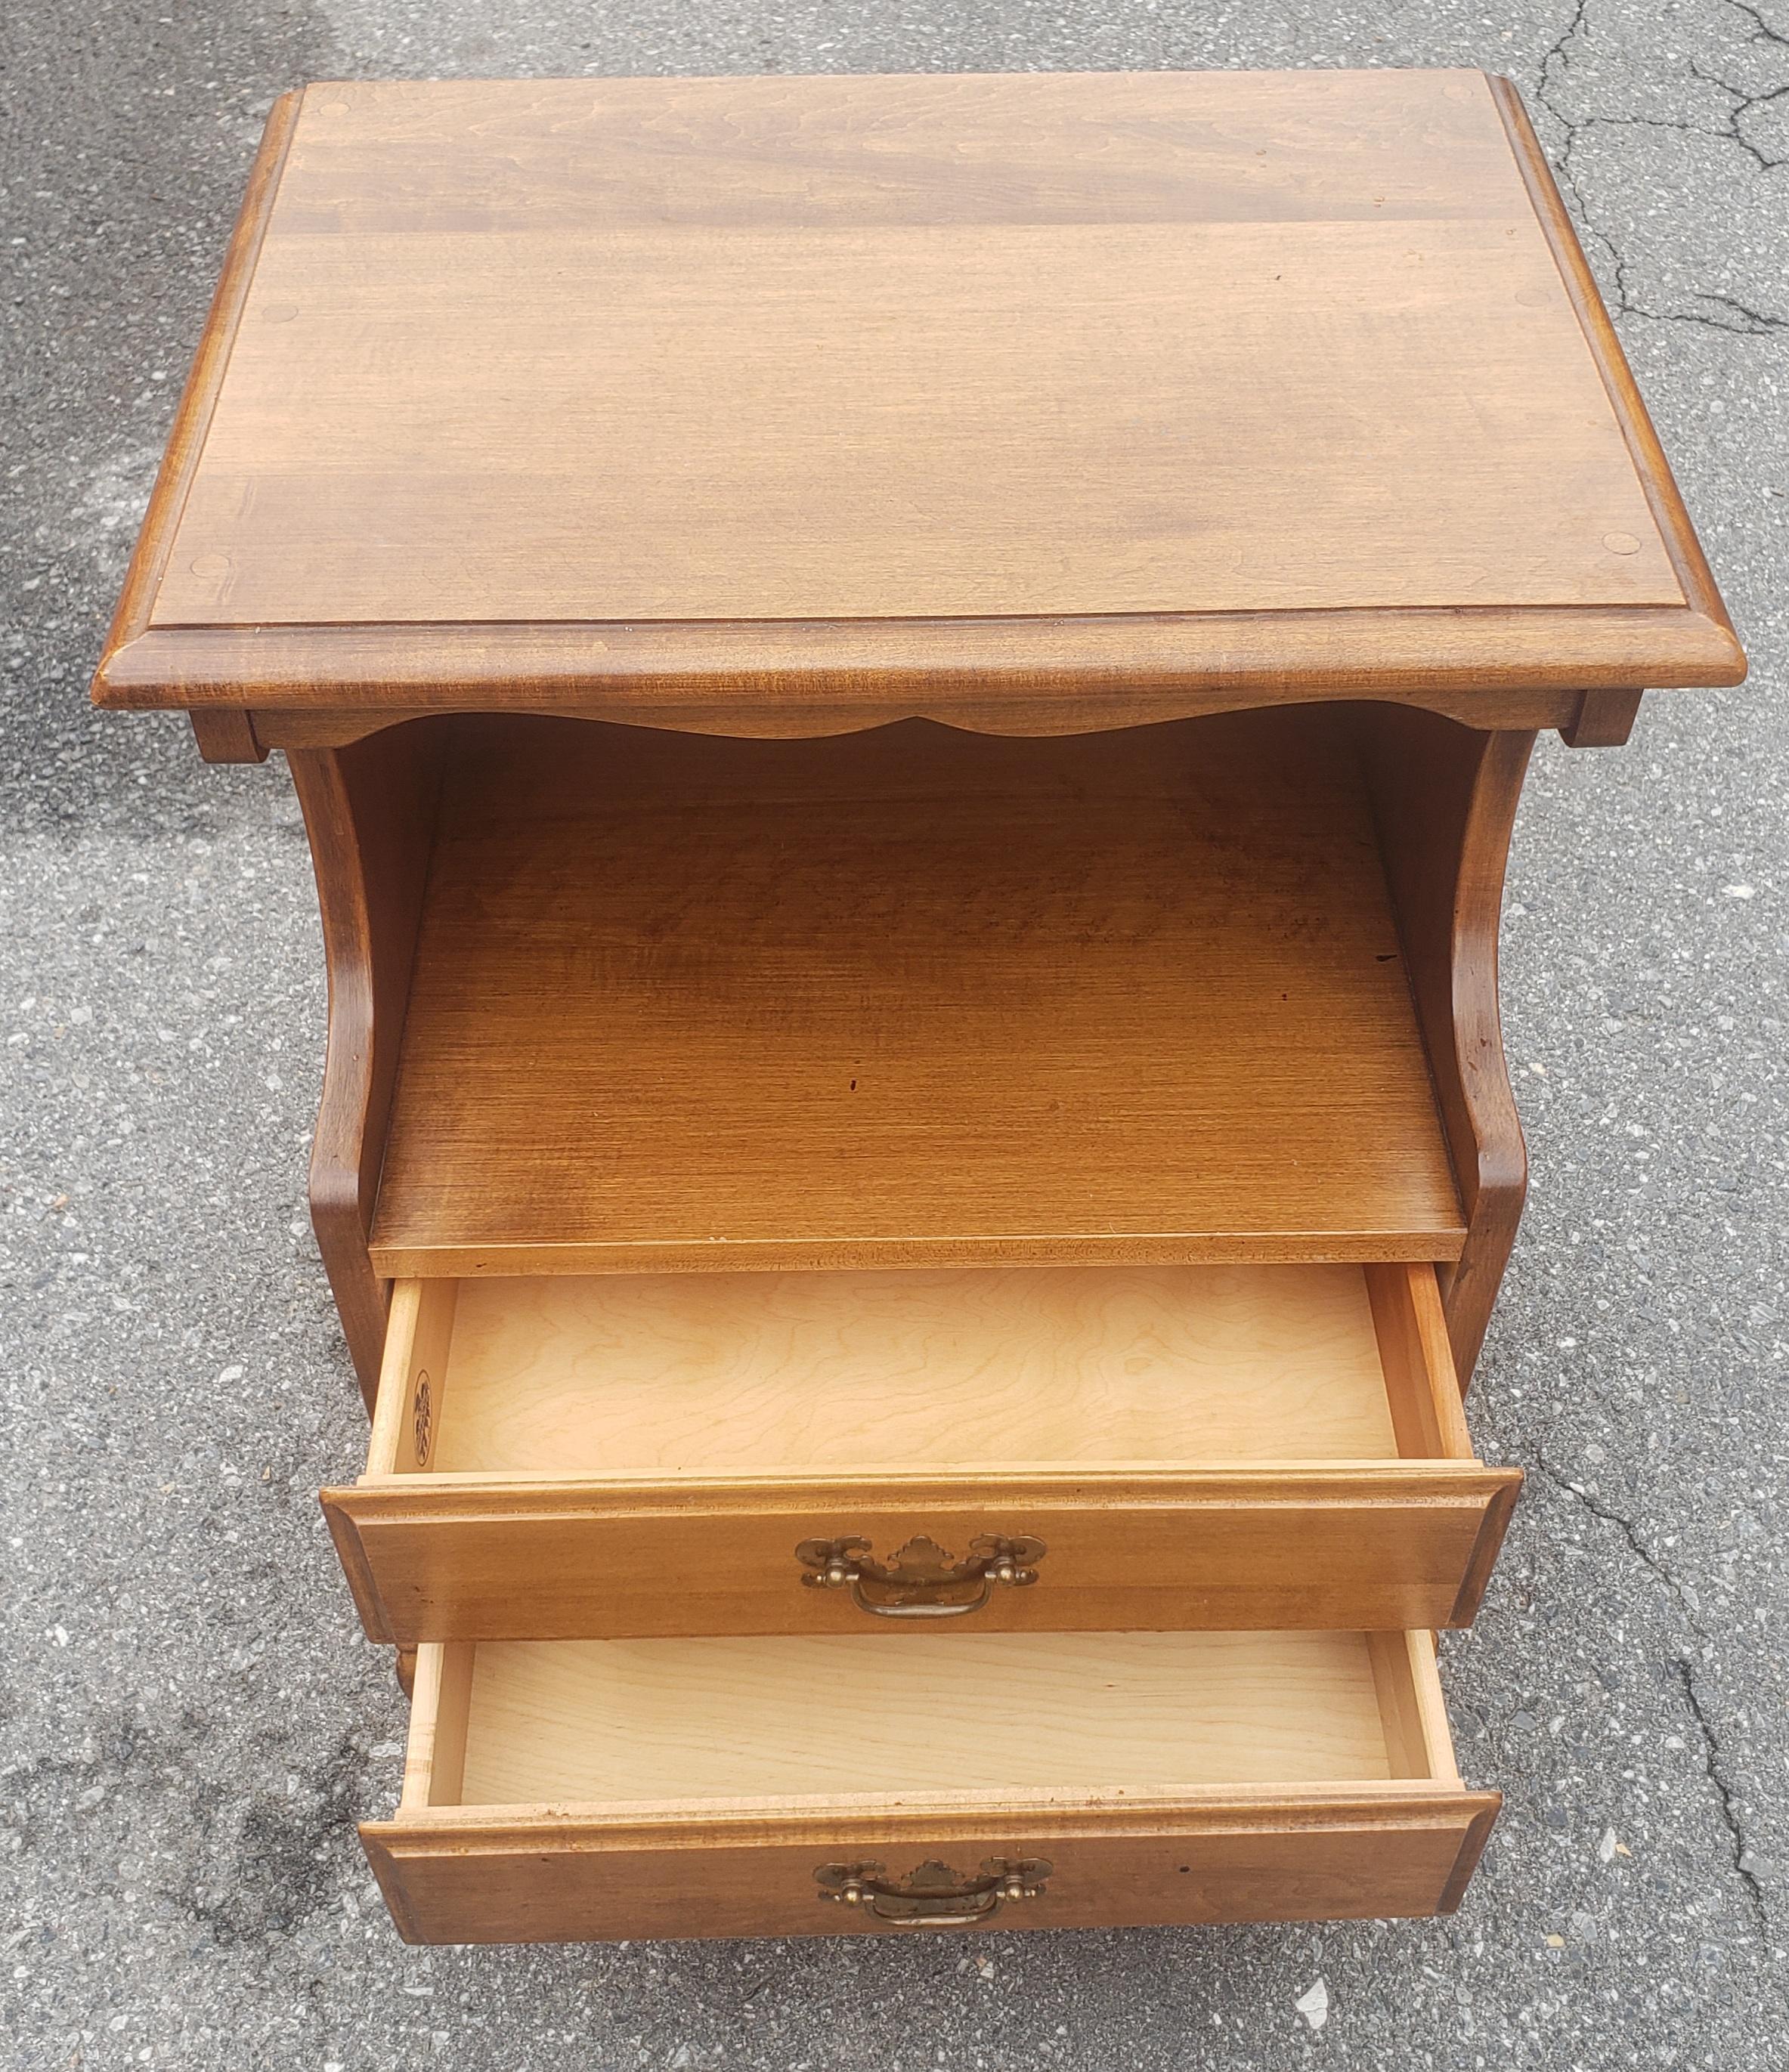 Heywood Wakefield mid Century style Two-Tier Two-Drawer Cinnamon nightstand Bedside Table en très bon état. Entièrement en bois massif, tiroirs à queue d'aronde. Mesure 19,5